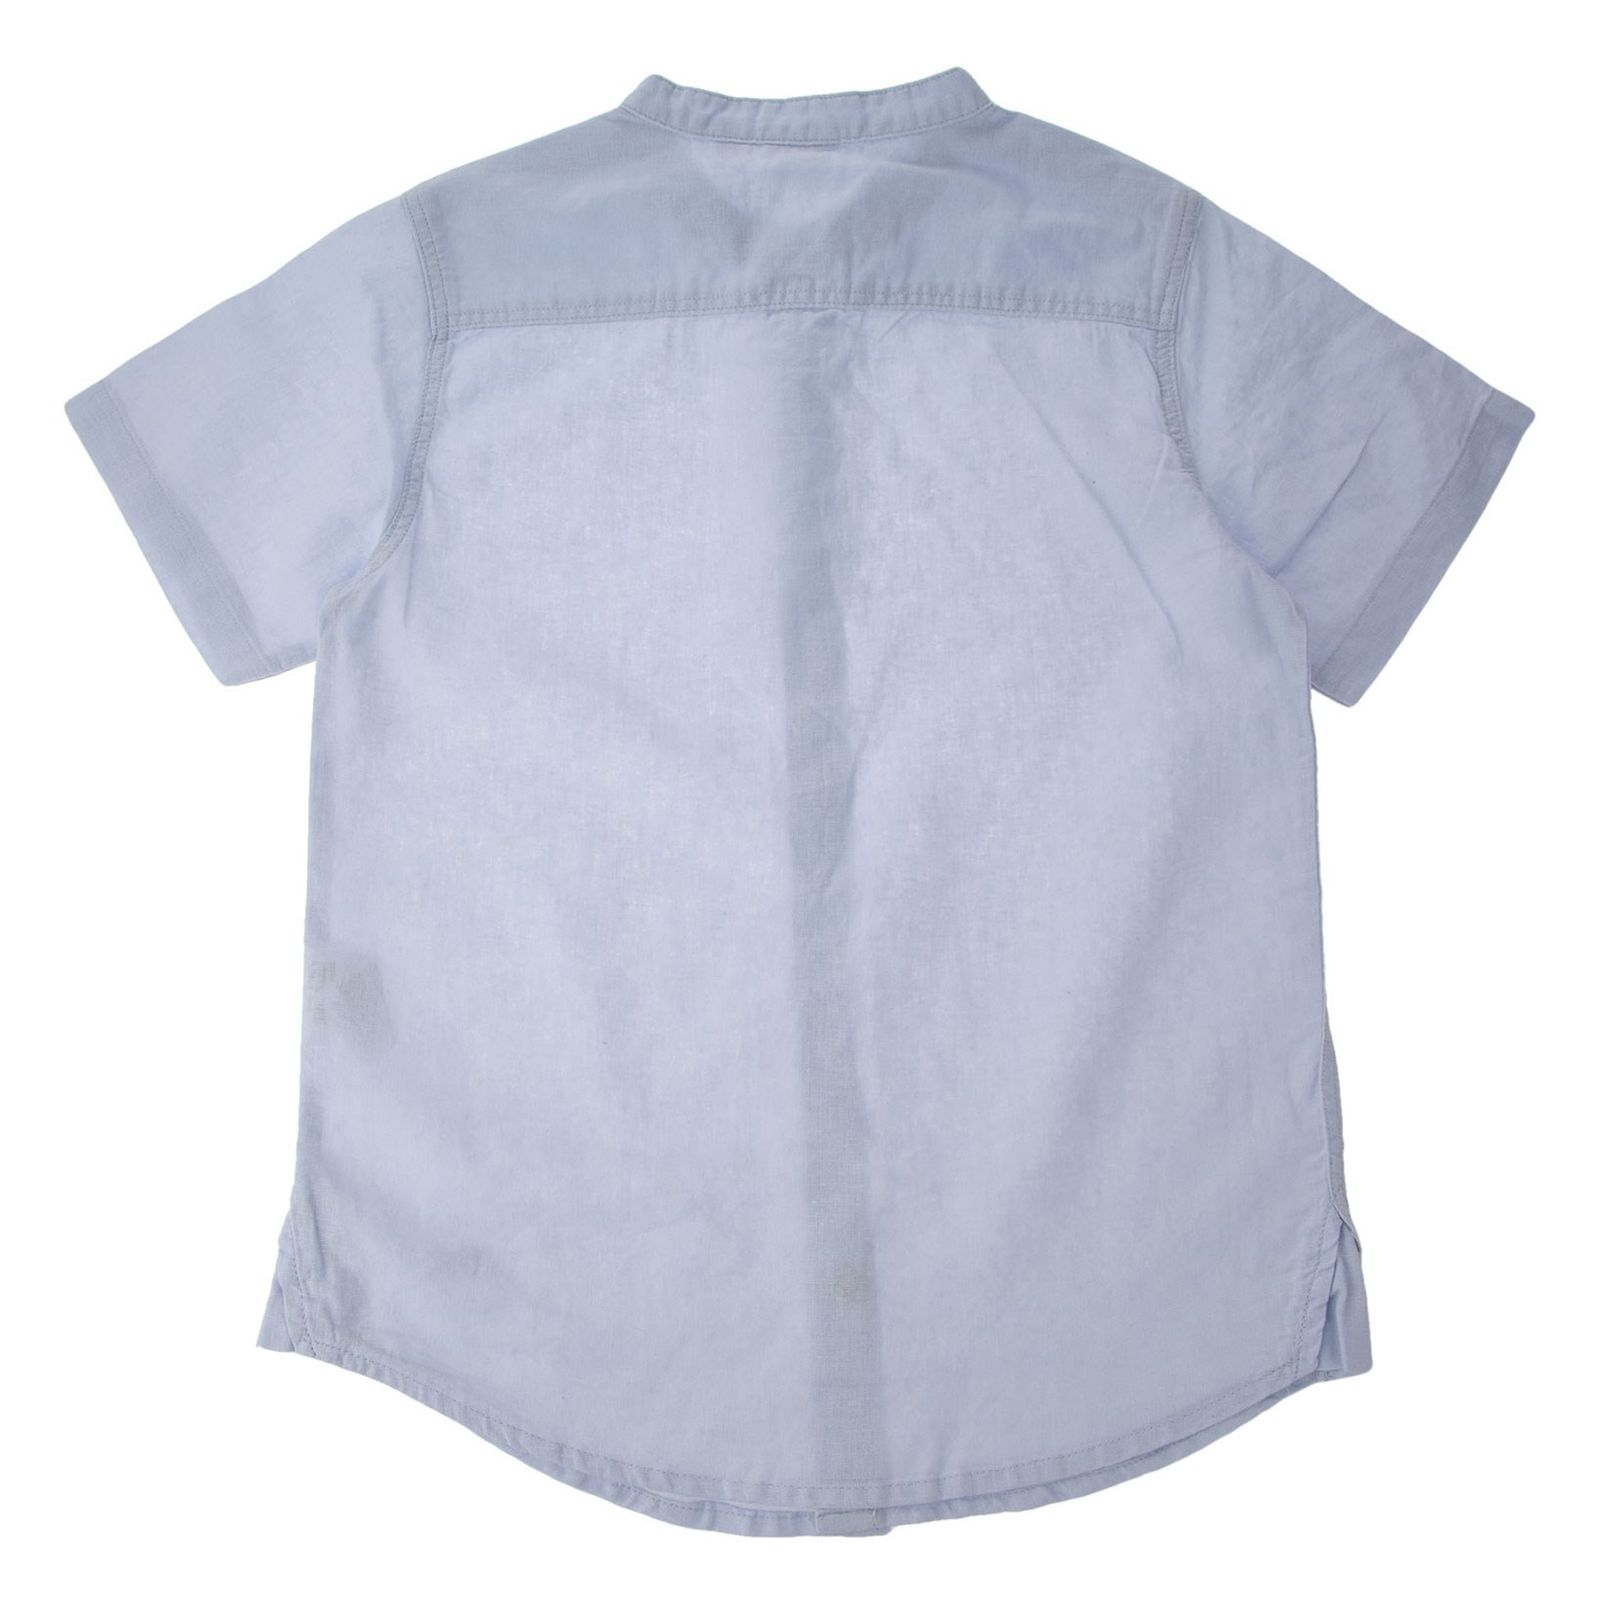 پیراهن آستین کوتاه پسرانه - بلوکیدز - آبی روشن - 3